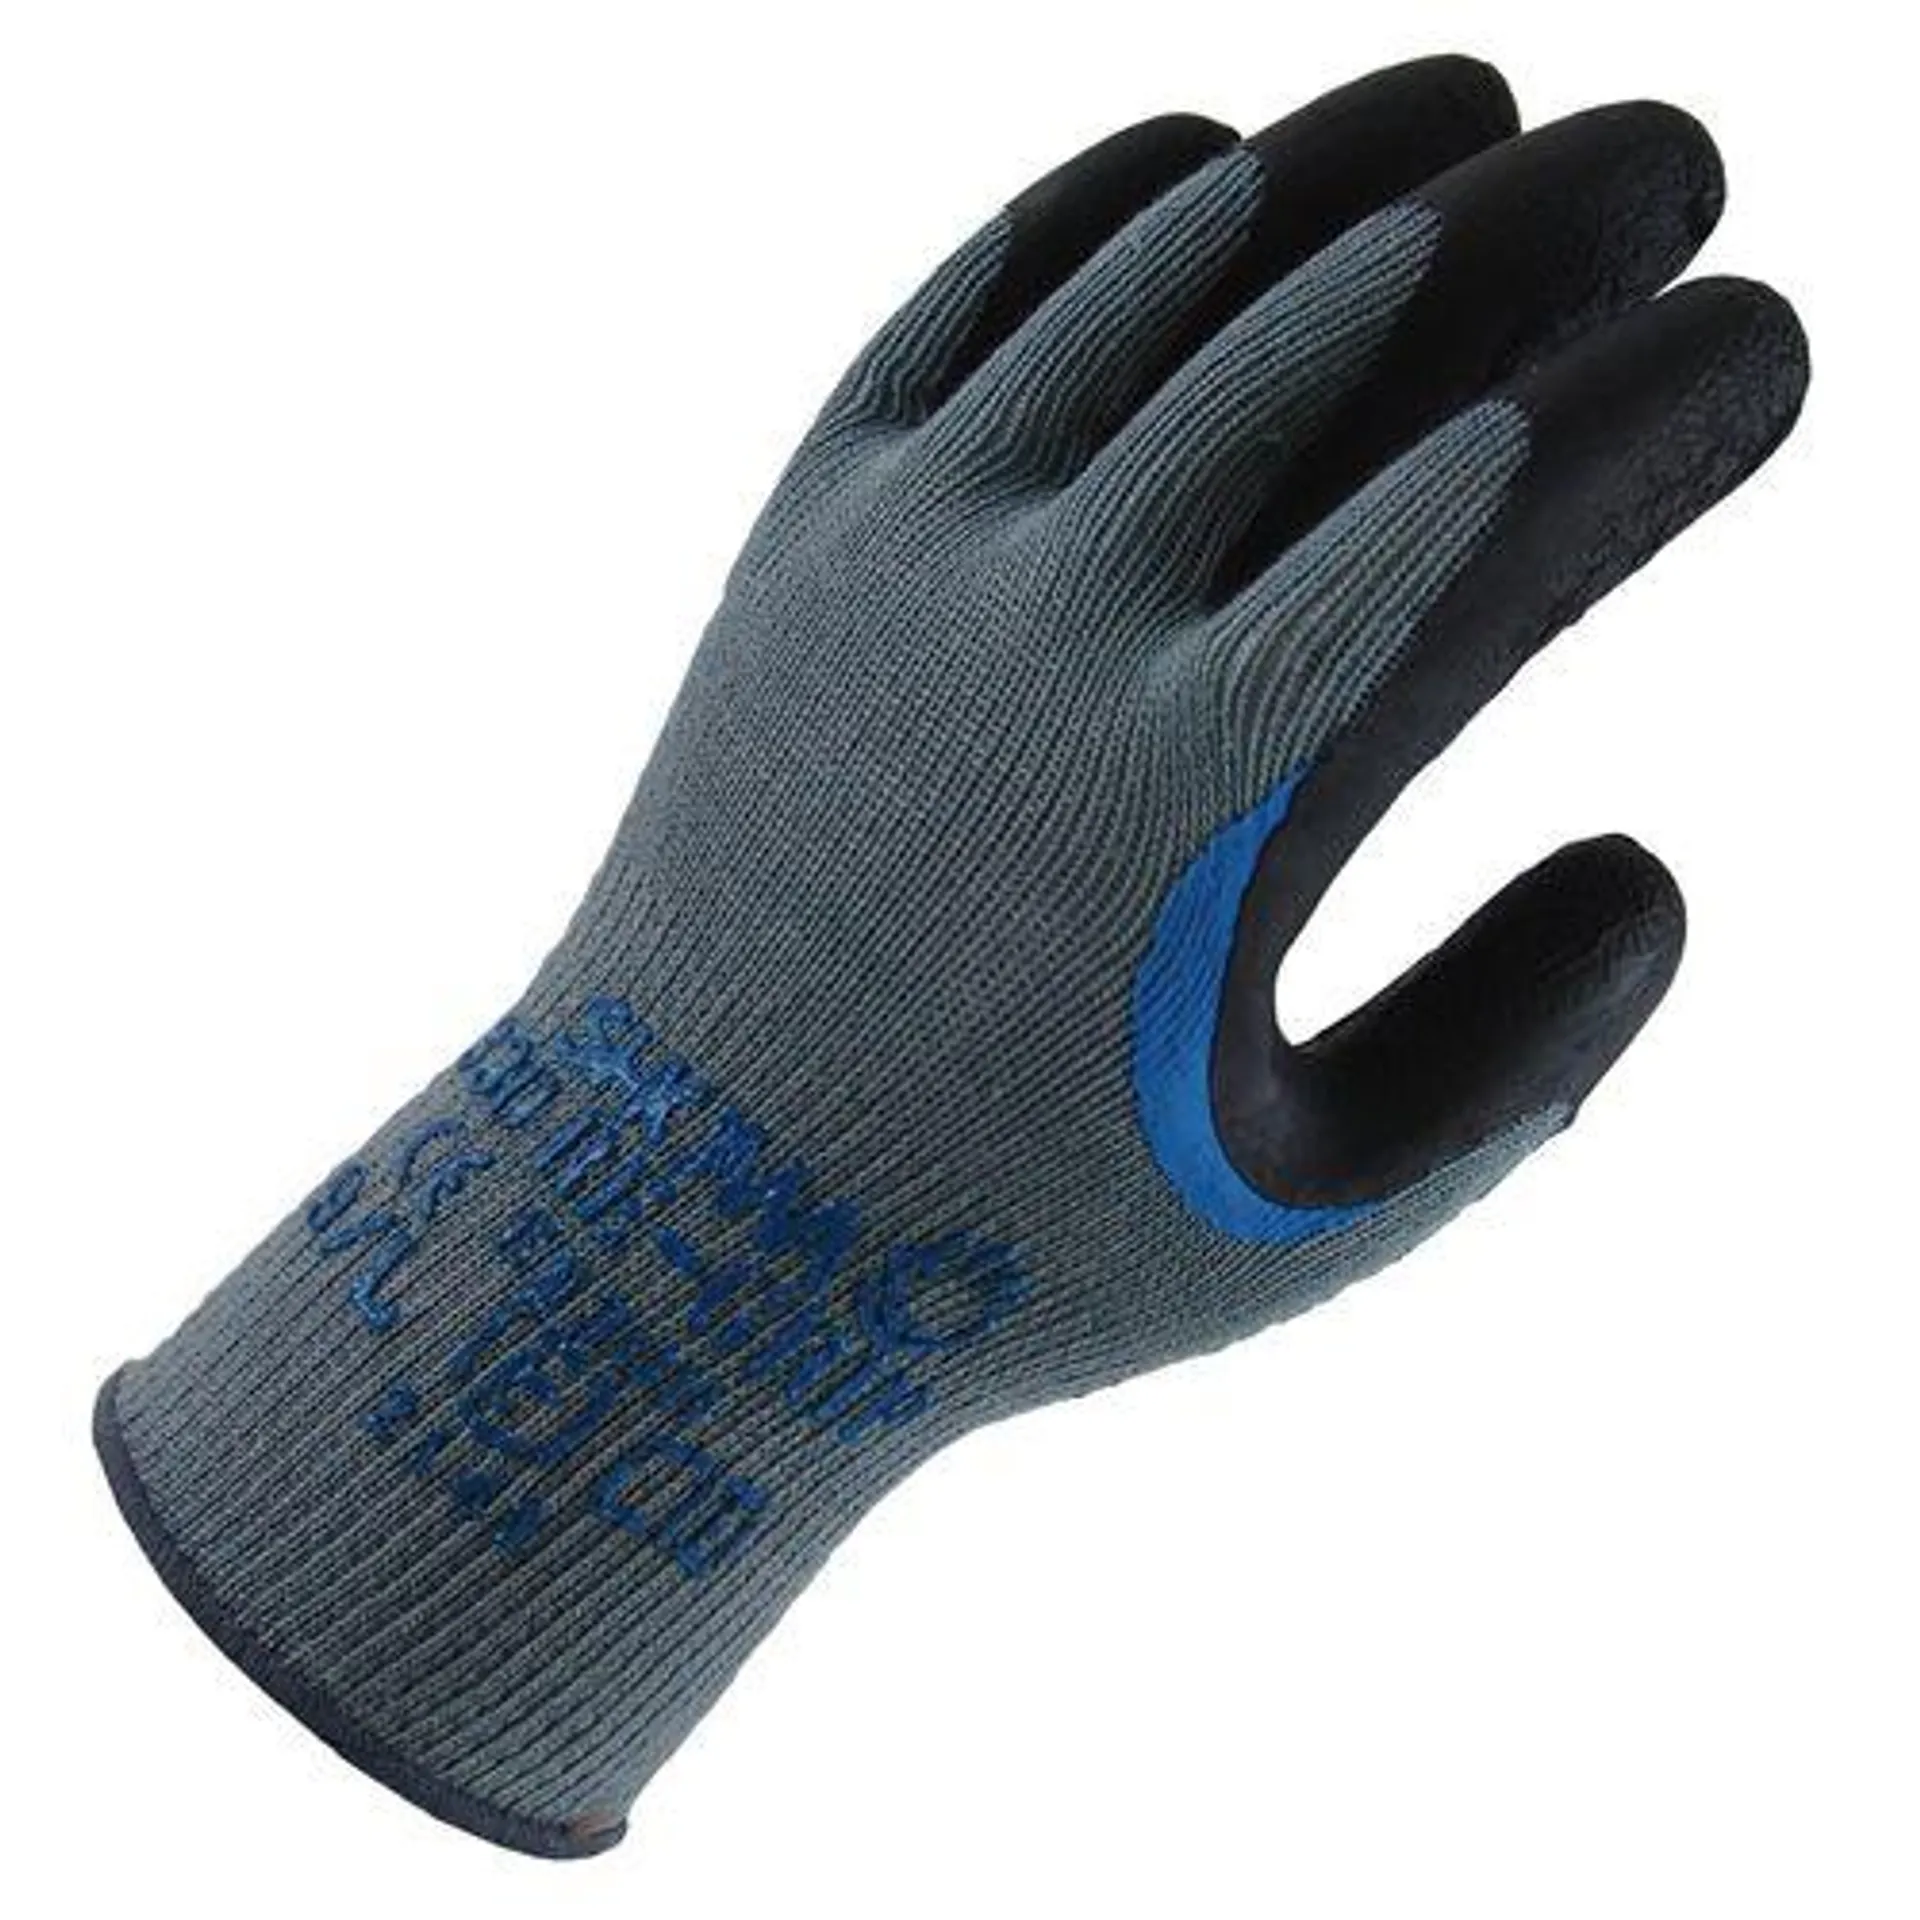 Lynn River X-Large Showa 330 Re-Grip Gardening Gloves